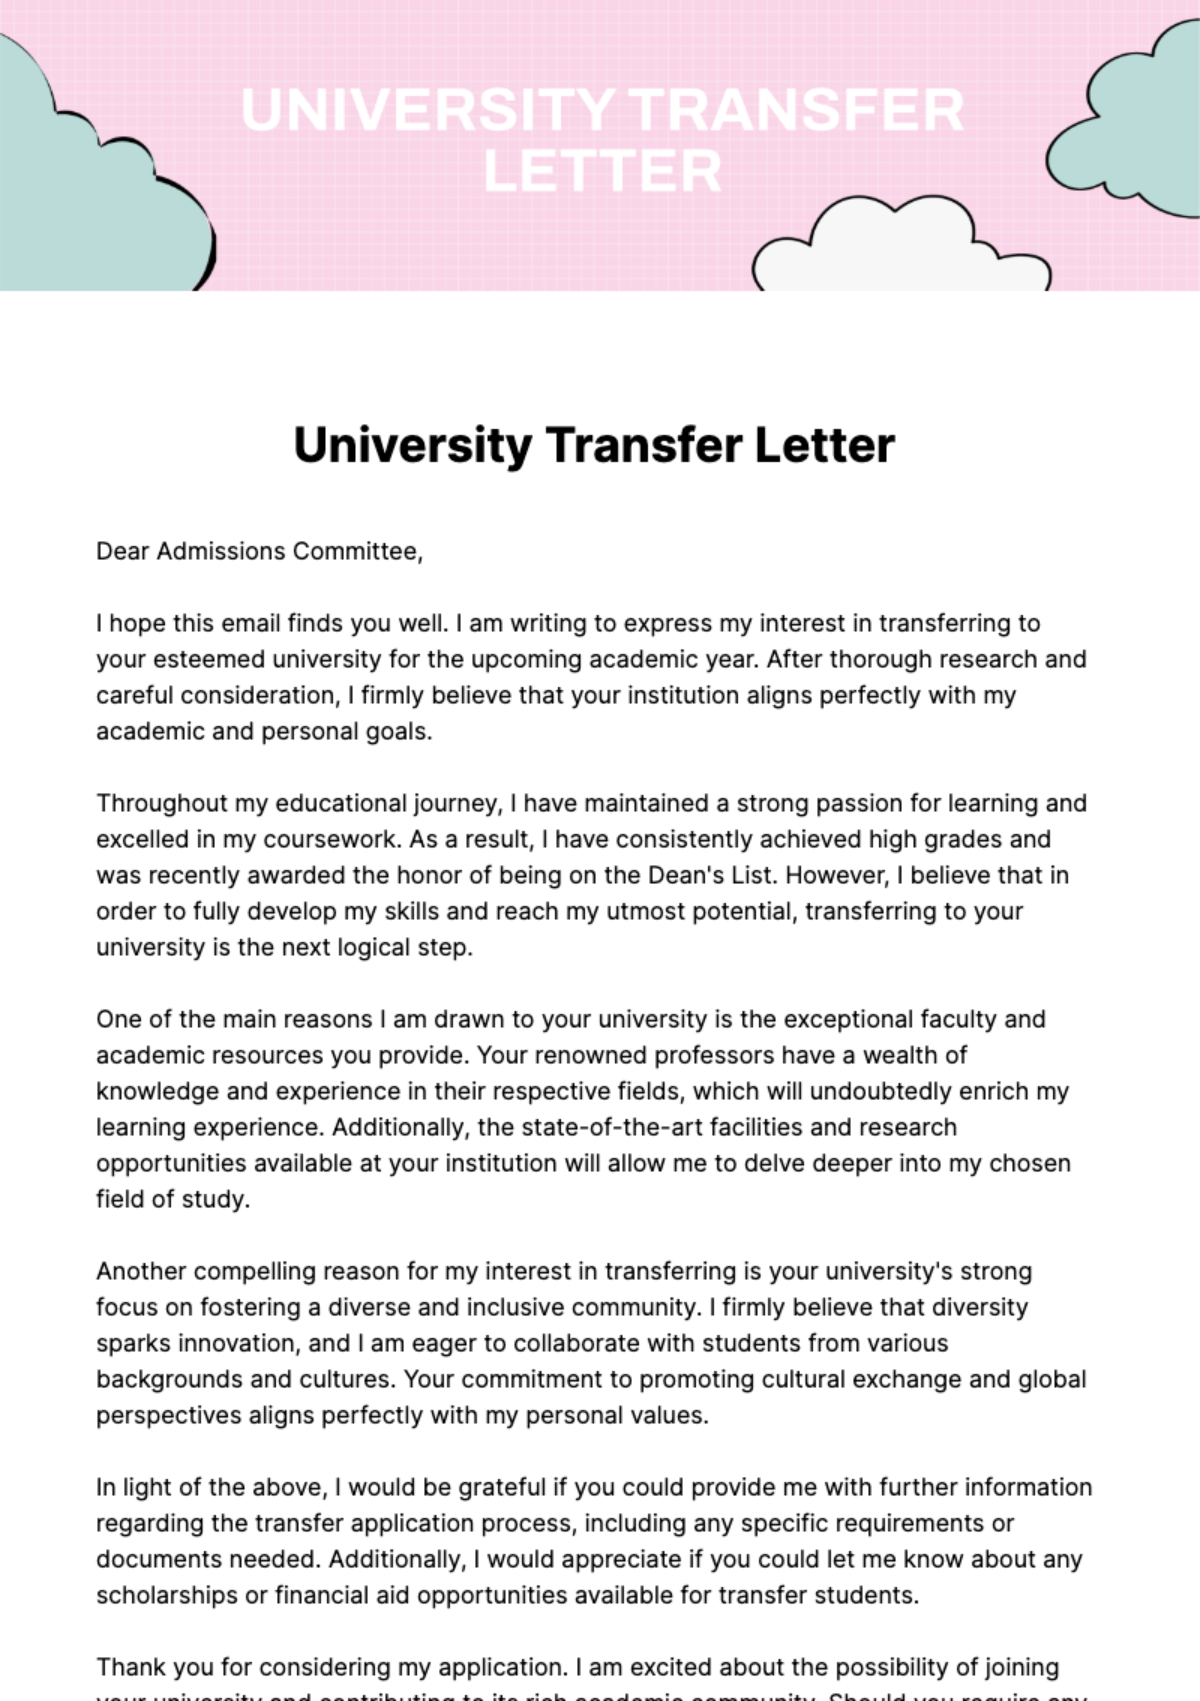 Free University Transfer Letter Template